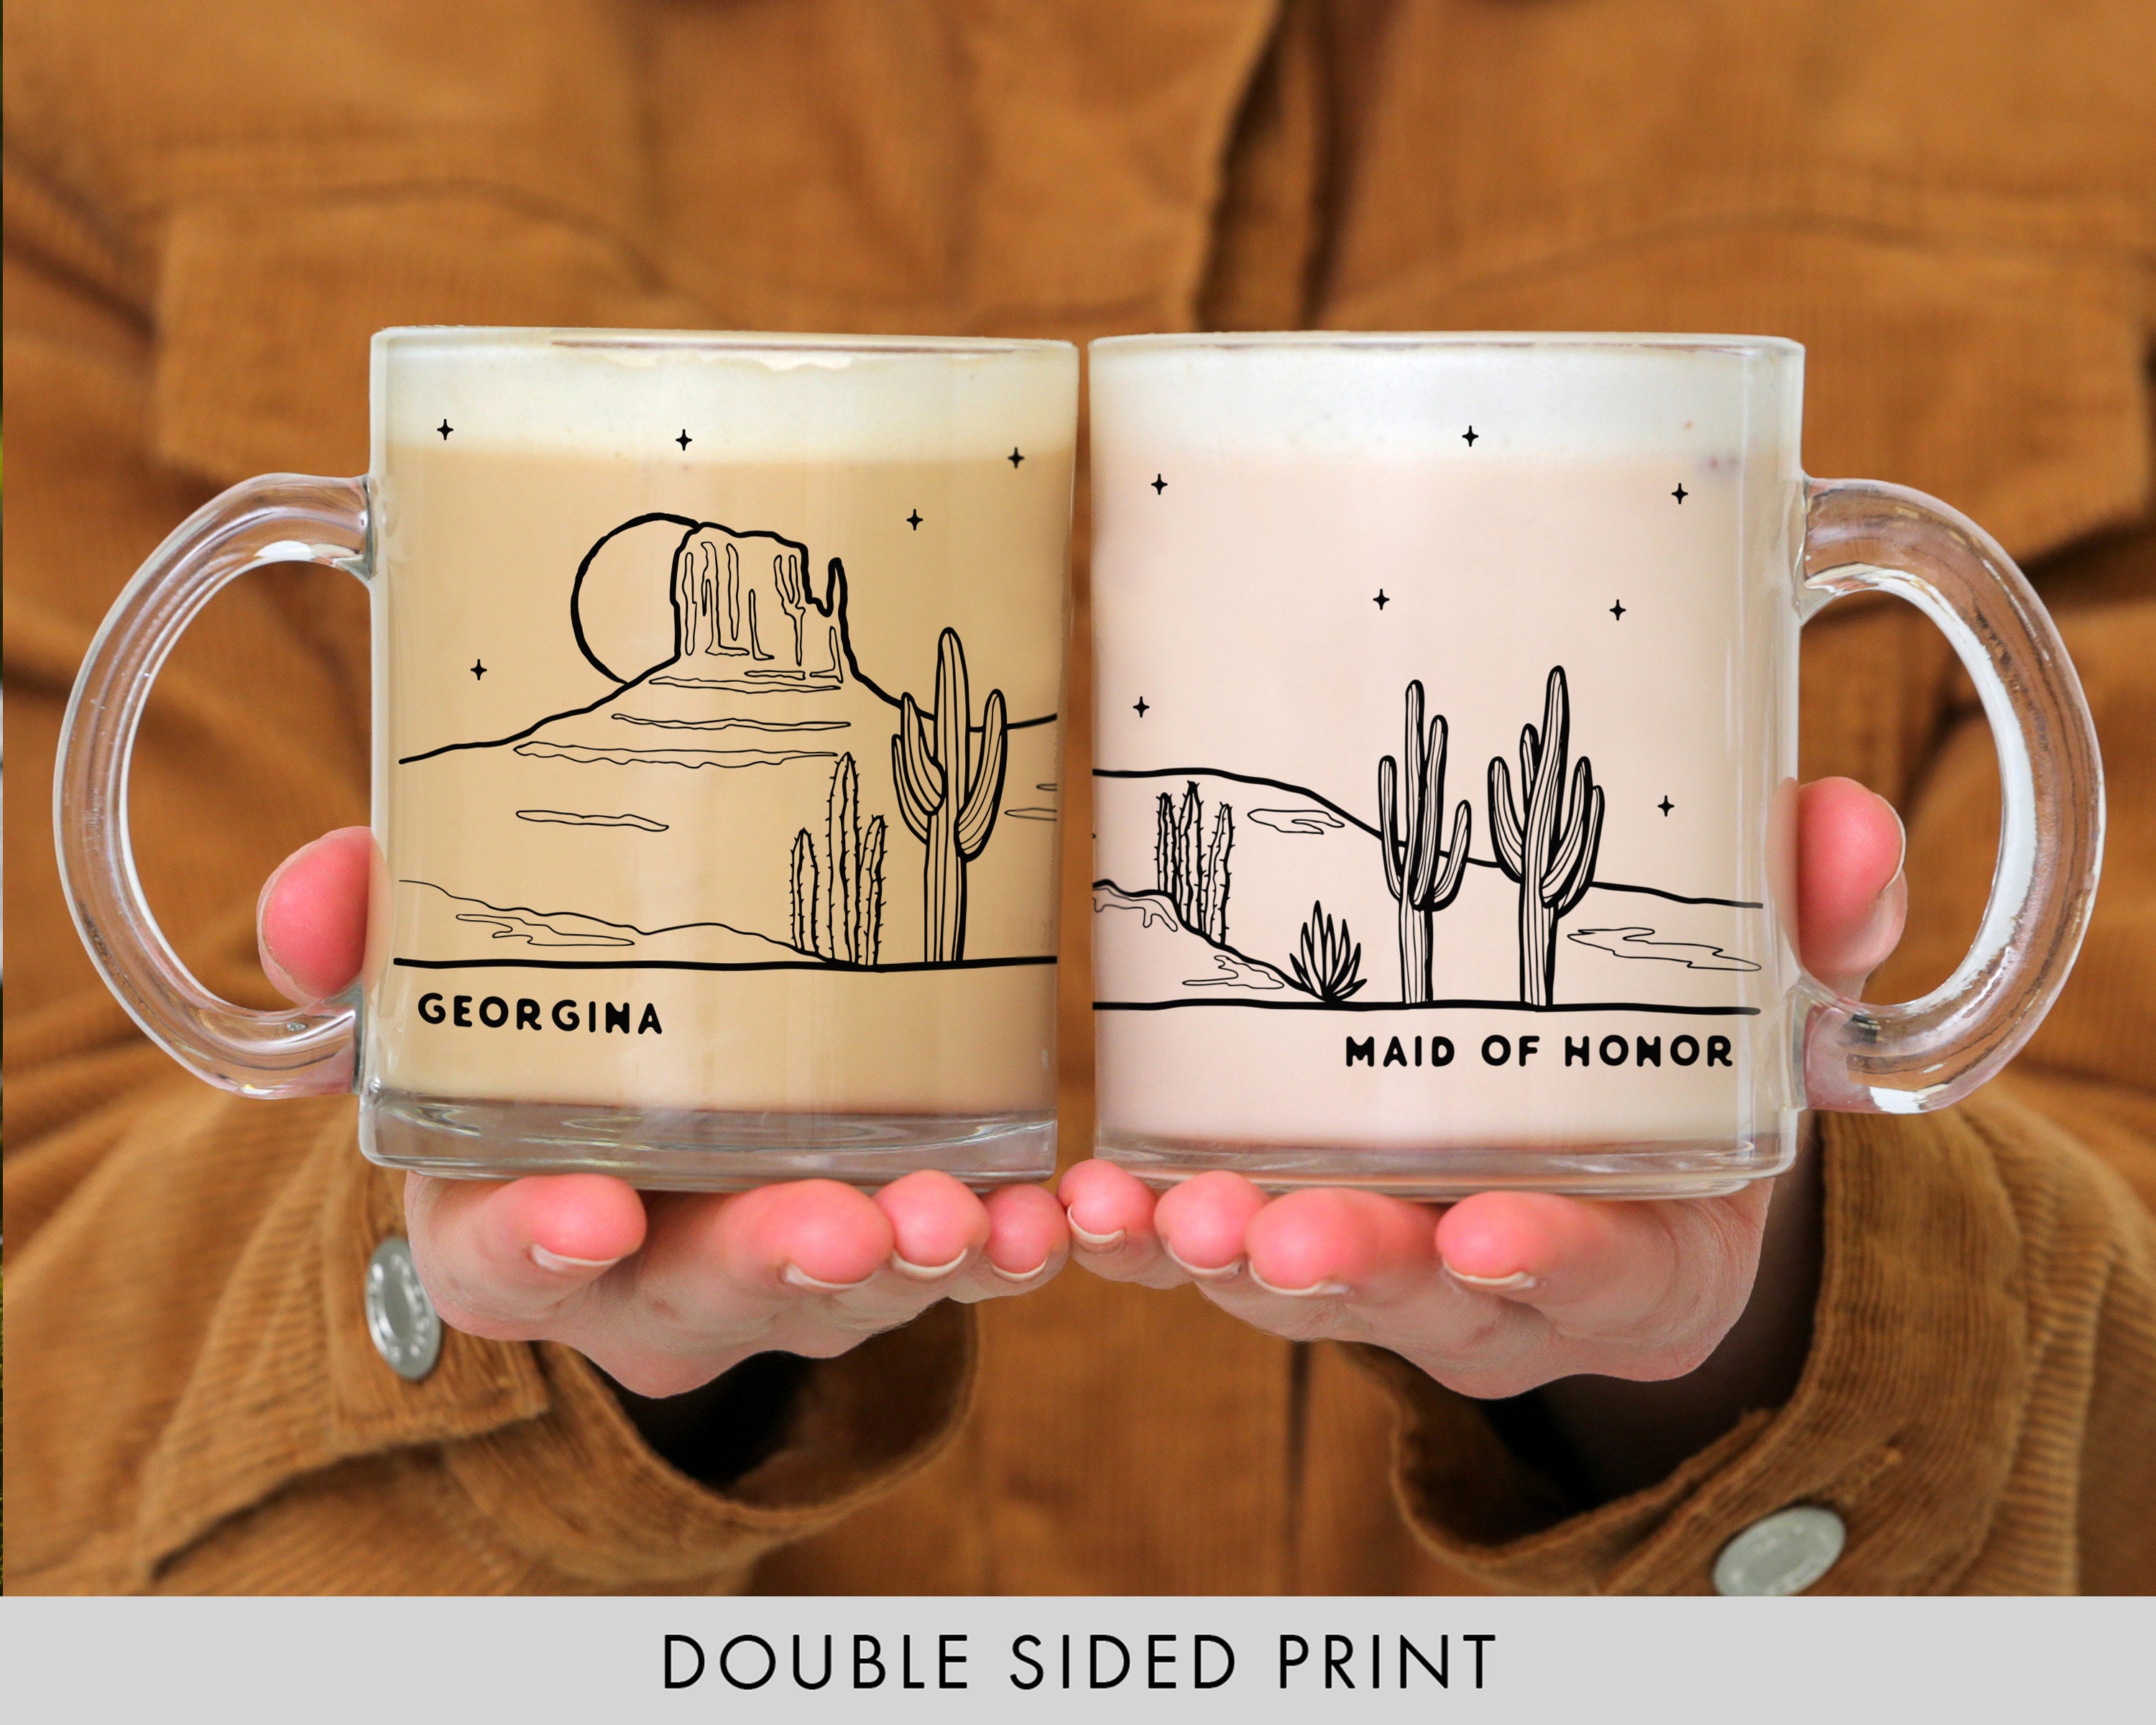 Cactus Handmade Pottery Mug in Bright, Hand Painted Desert Colors